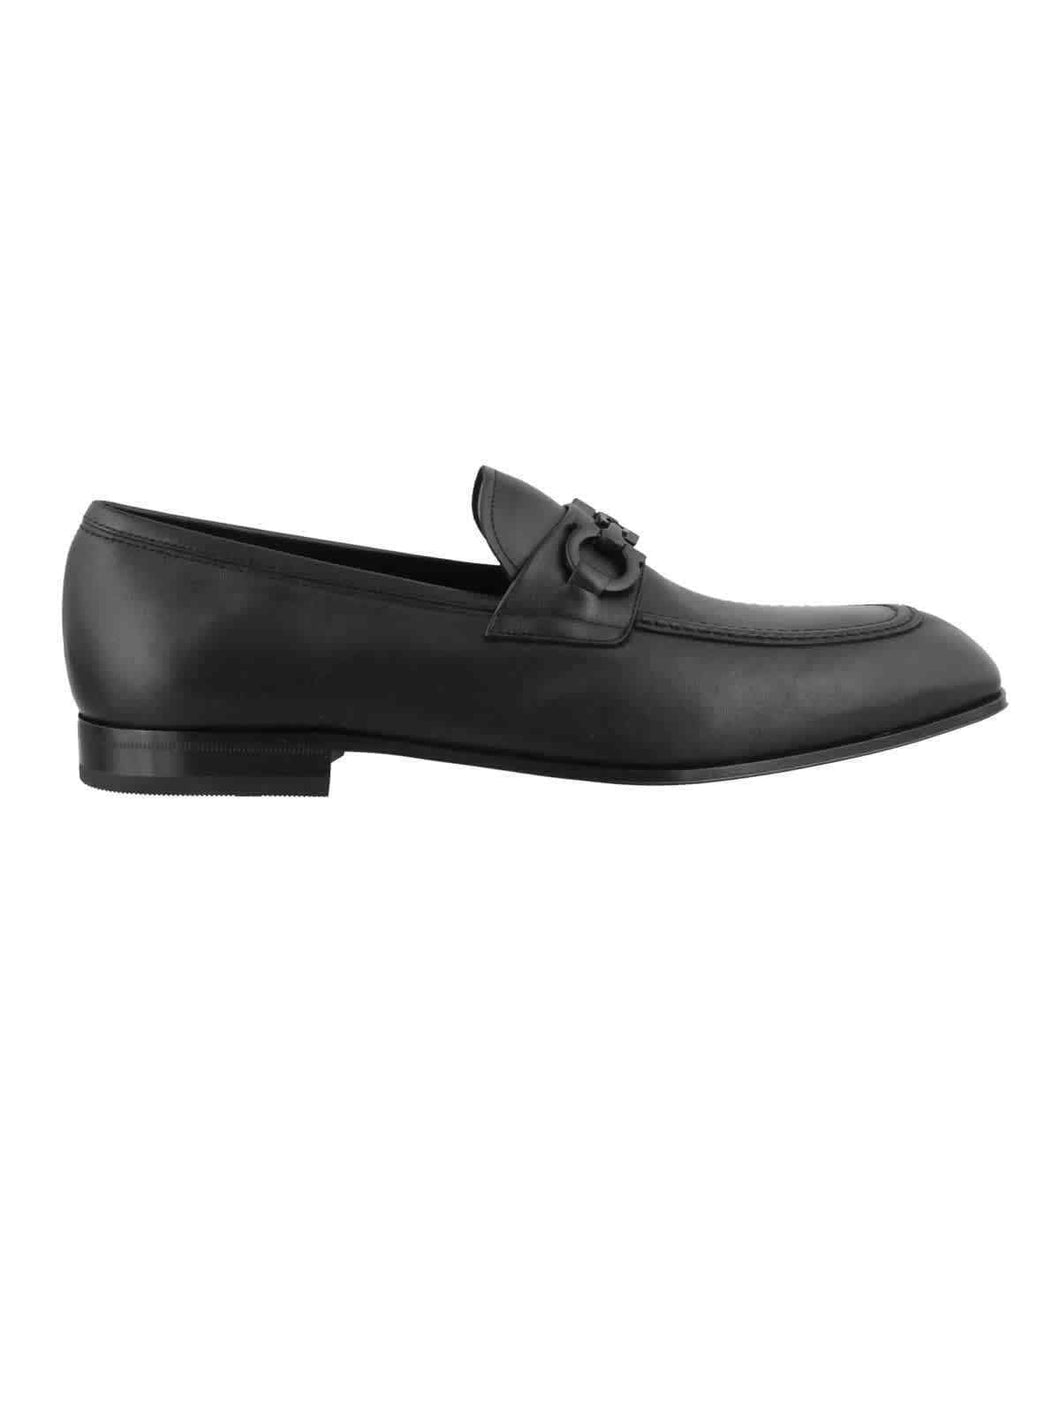 NEW SALVATORE FERRAGAMO Asten Men's 705673 Black Shoe Size 6.5W MSRP $750